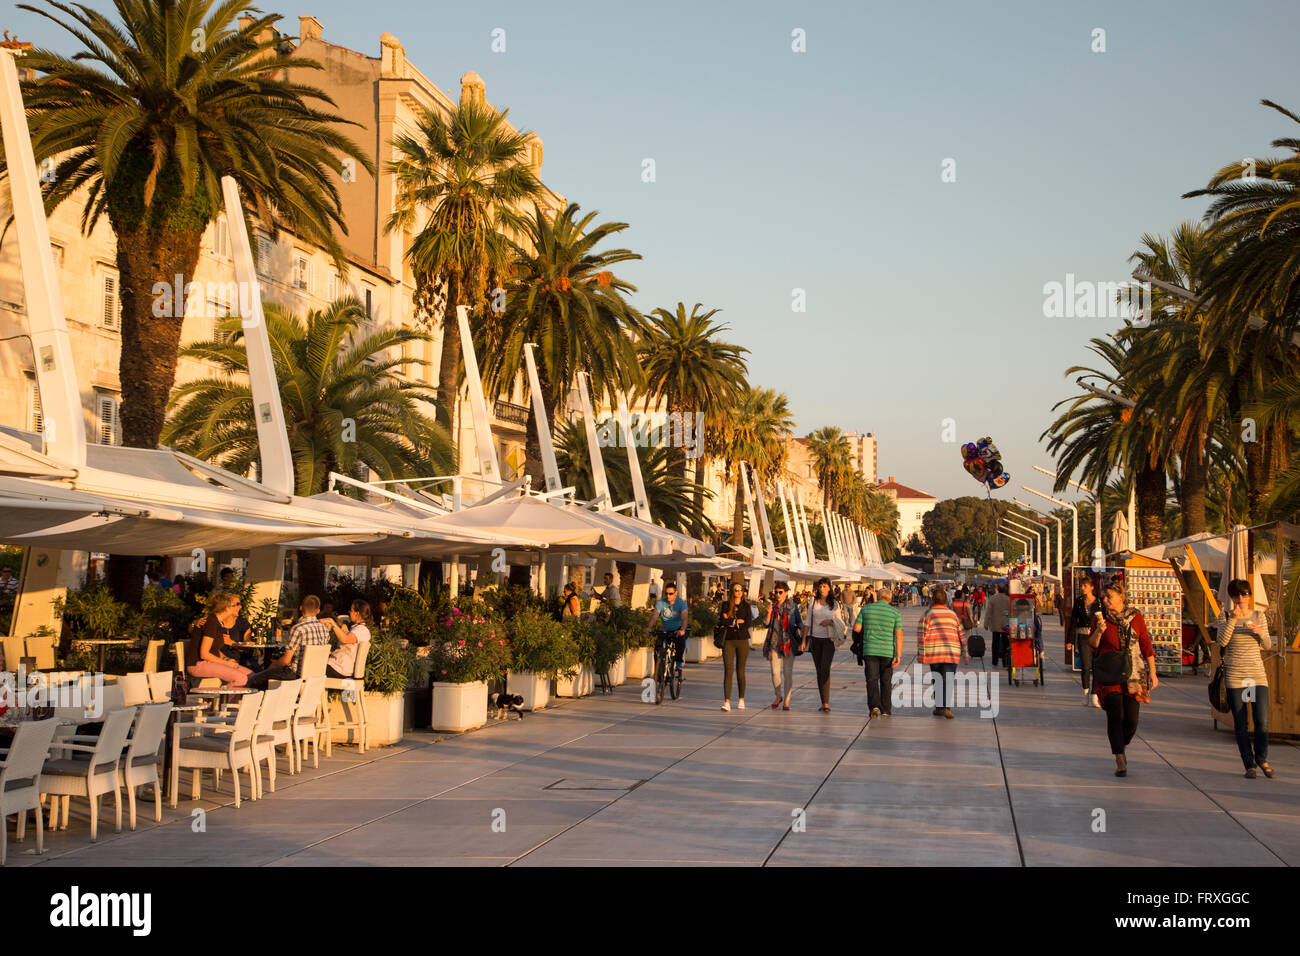 People sitting in outdoor cafes along The Riva seafront promenade, Split, Split-Dalmatia, Croatia Stock Photo